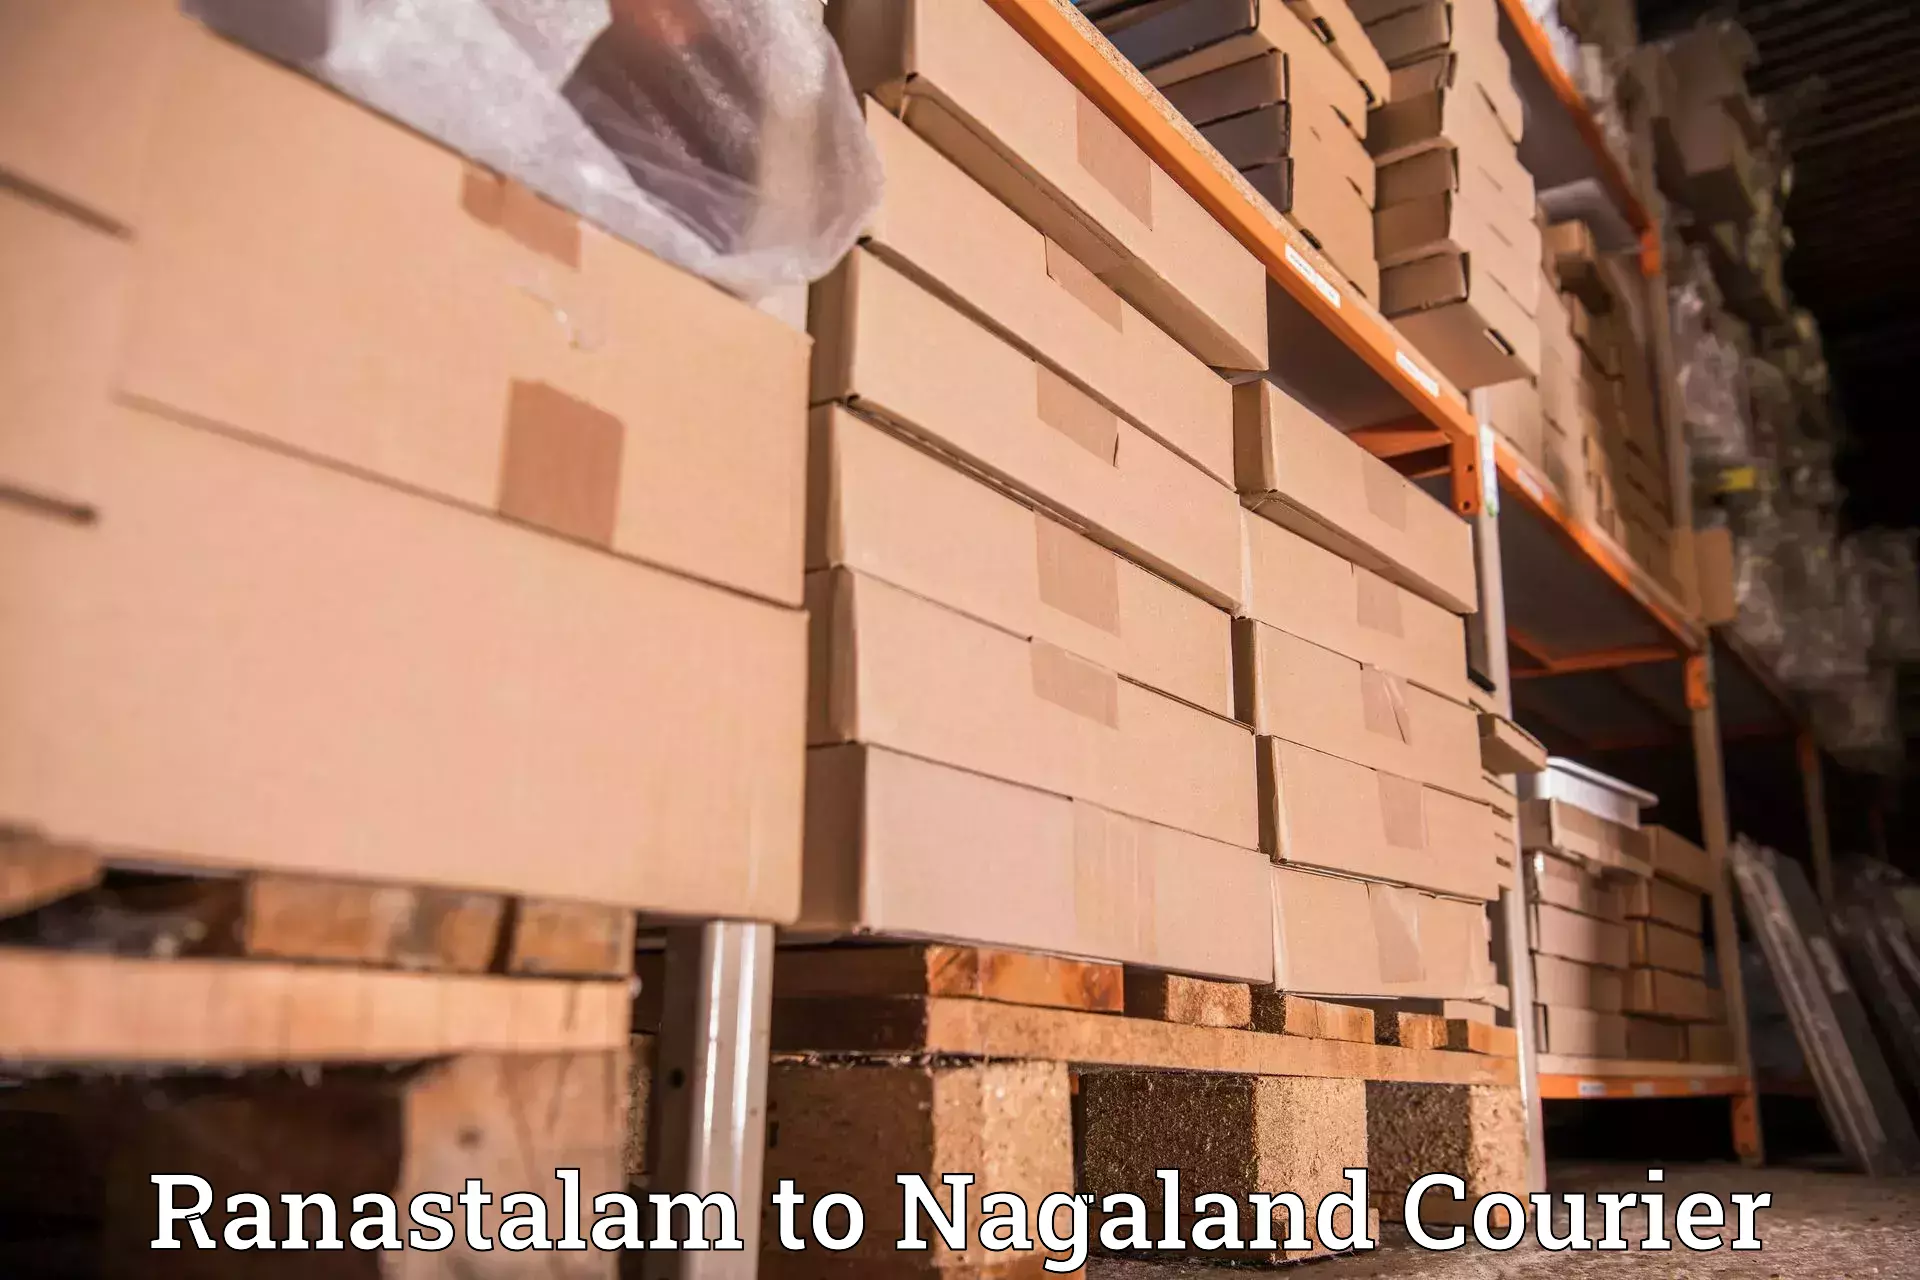 Easy return solutions Ranastalam to Nagaland